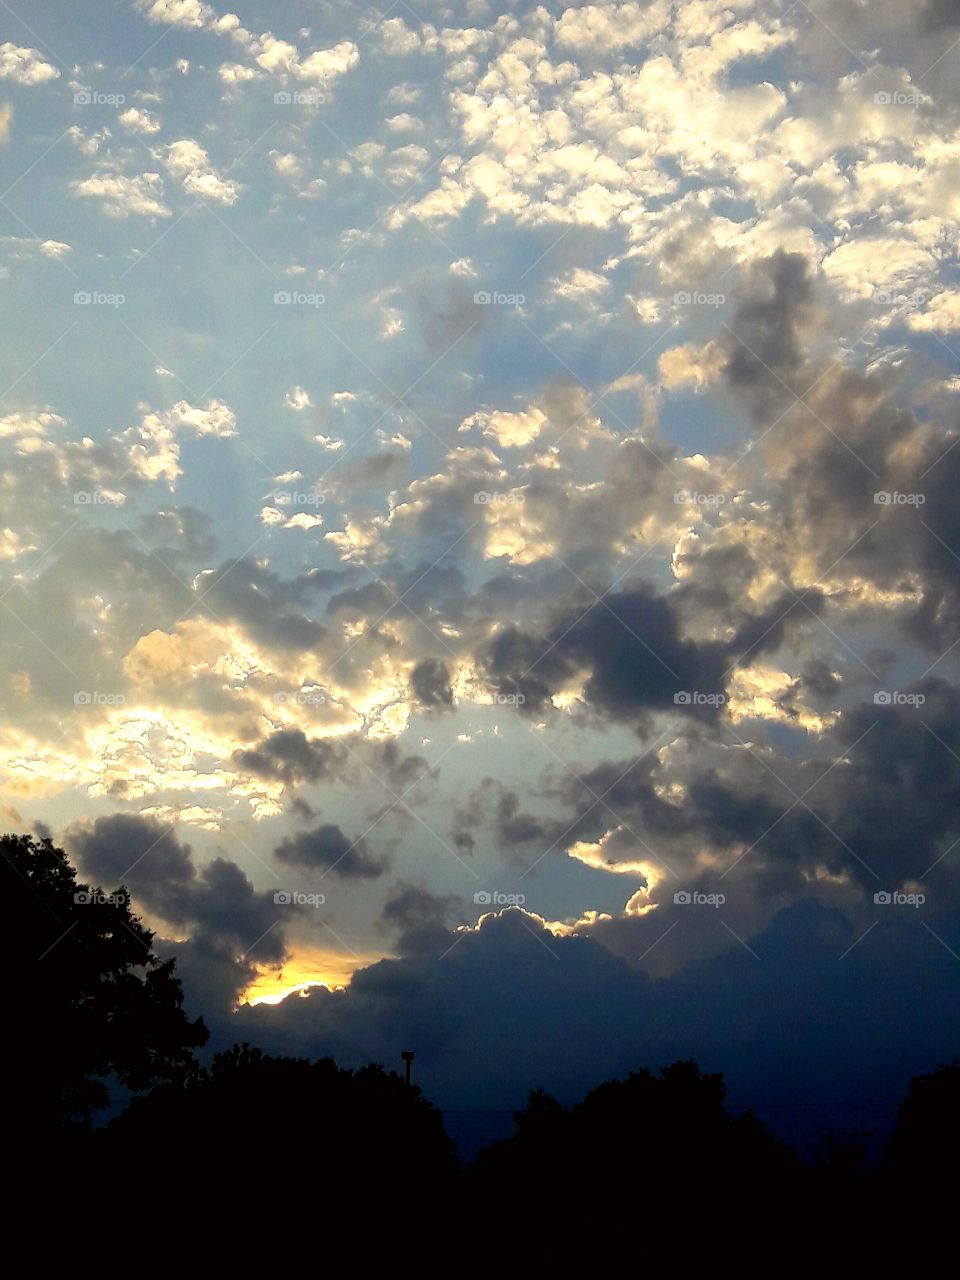 heaven sent clouds